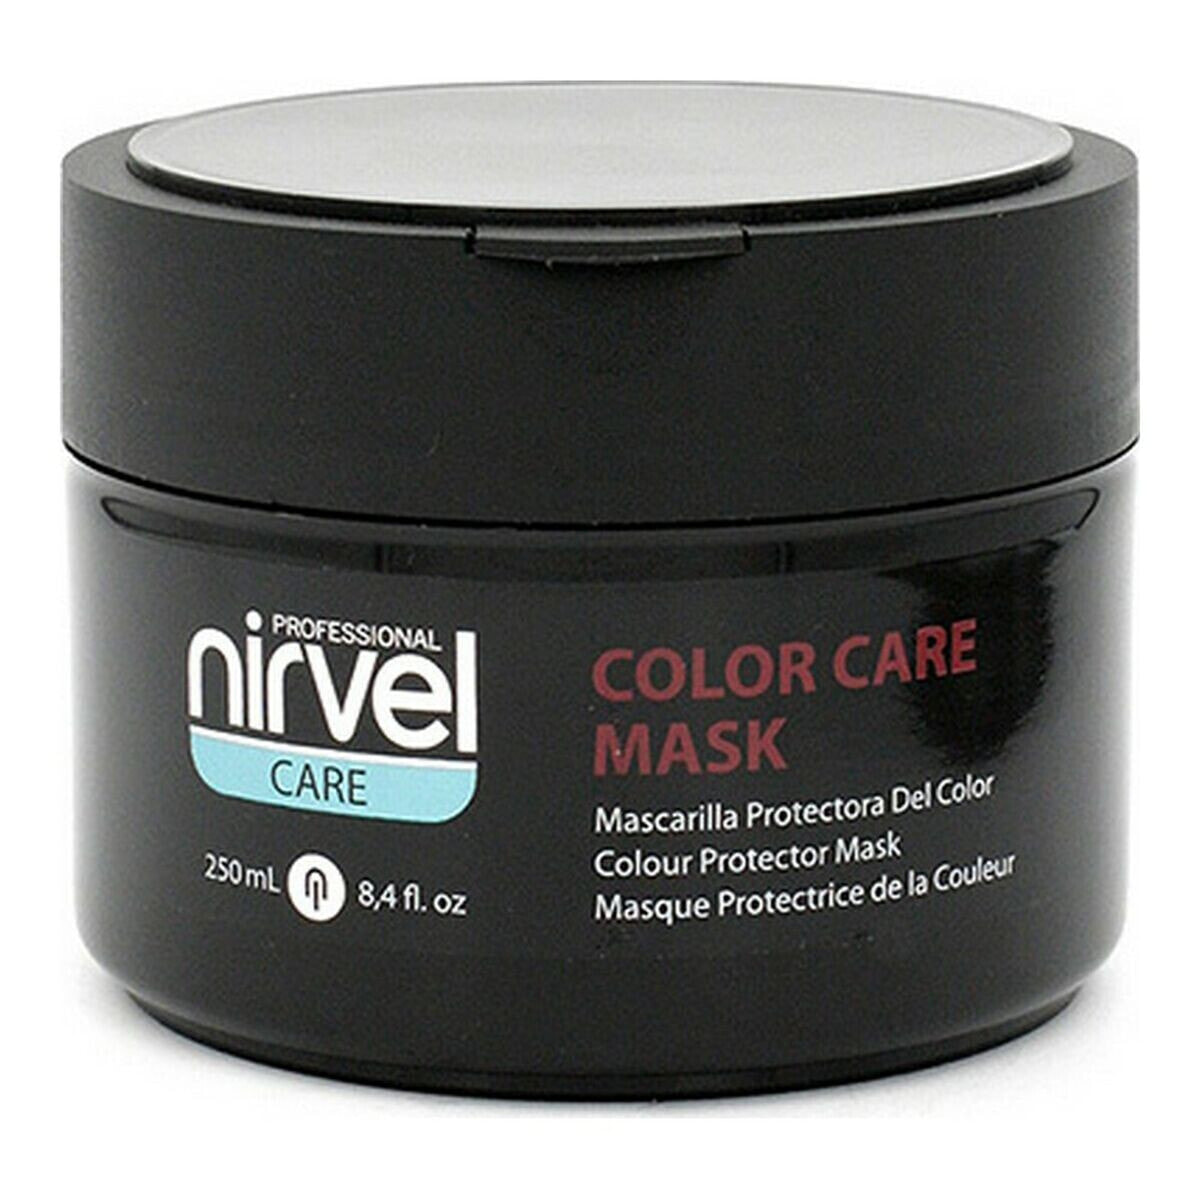 Капиллярная маска Color Care Nirvel Care Mascarilla (250 ml)